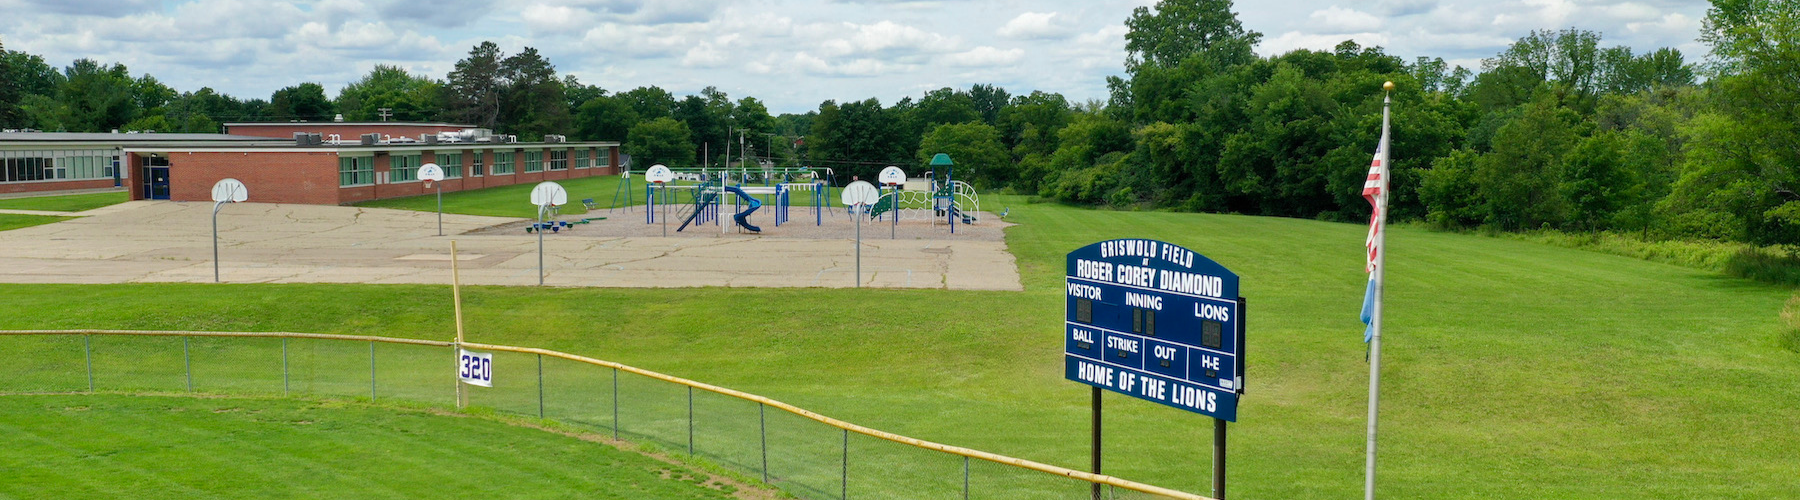 Maplewood Elementary School - Playground